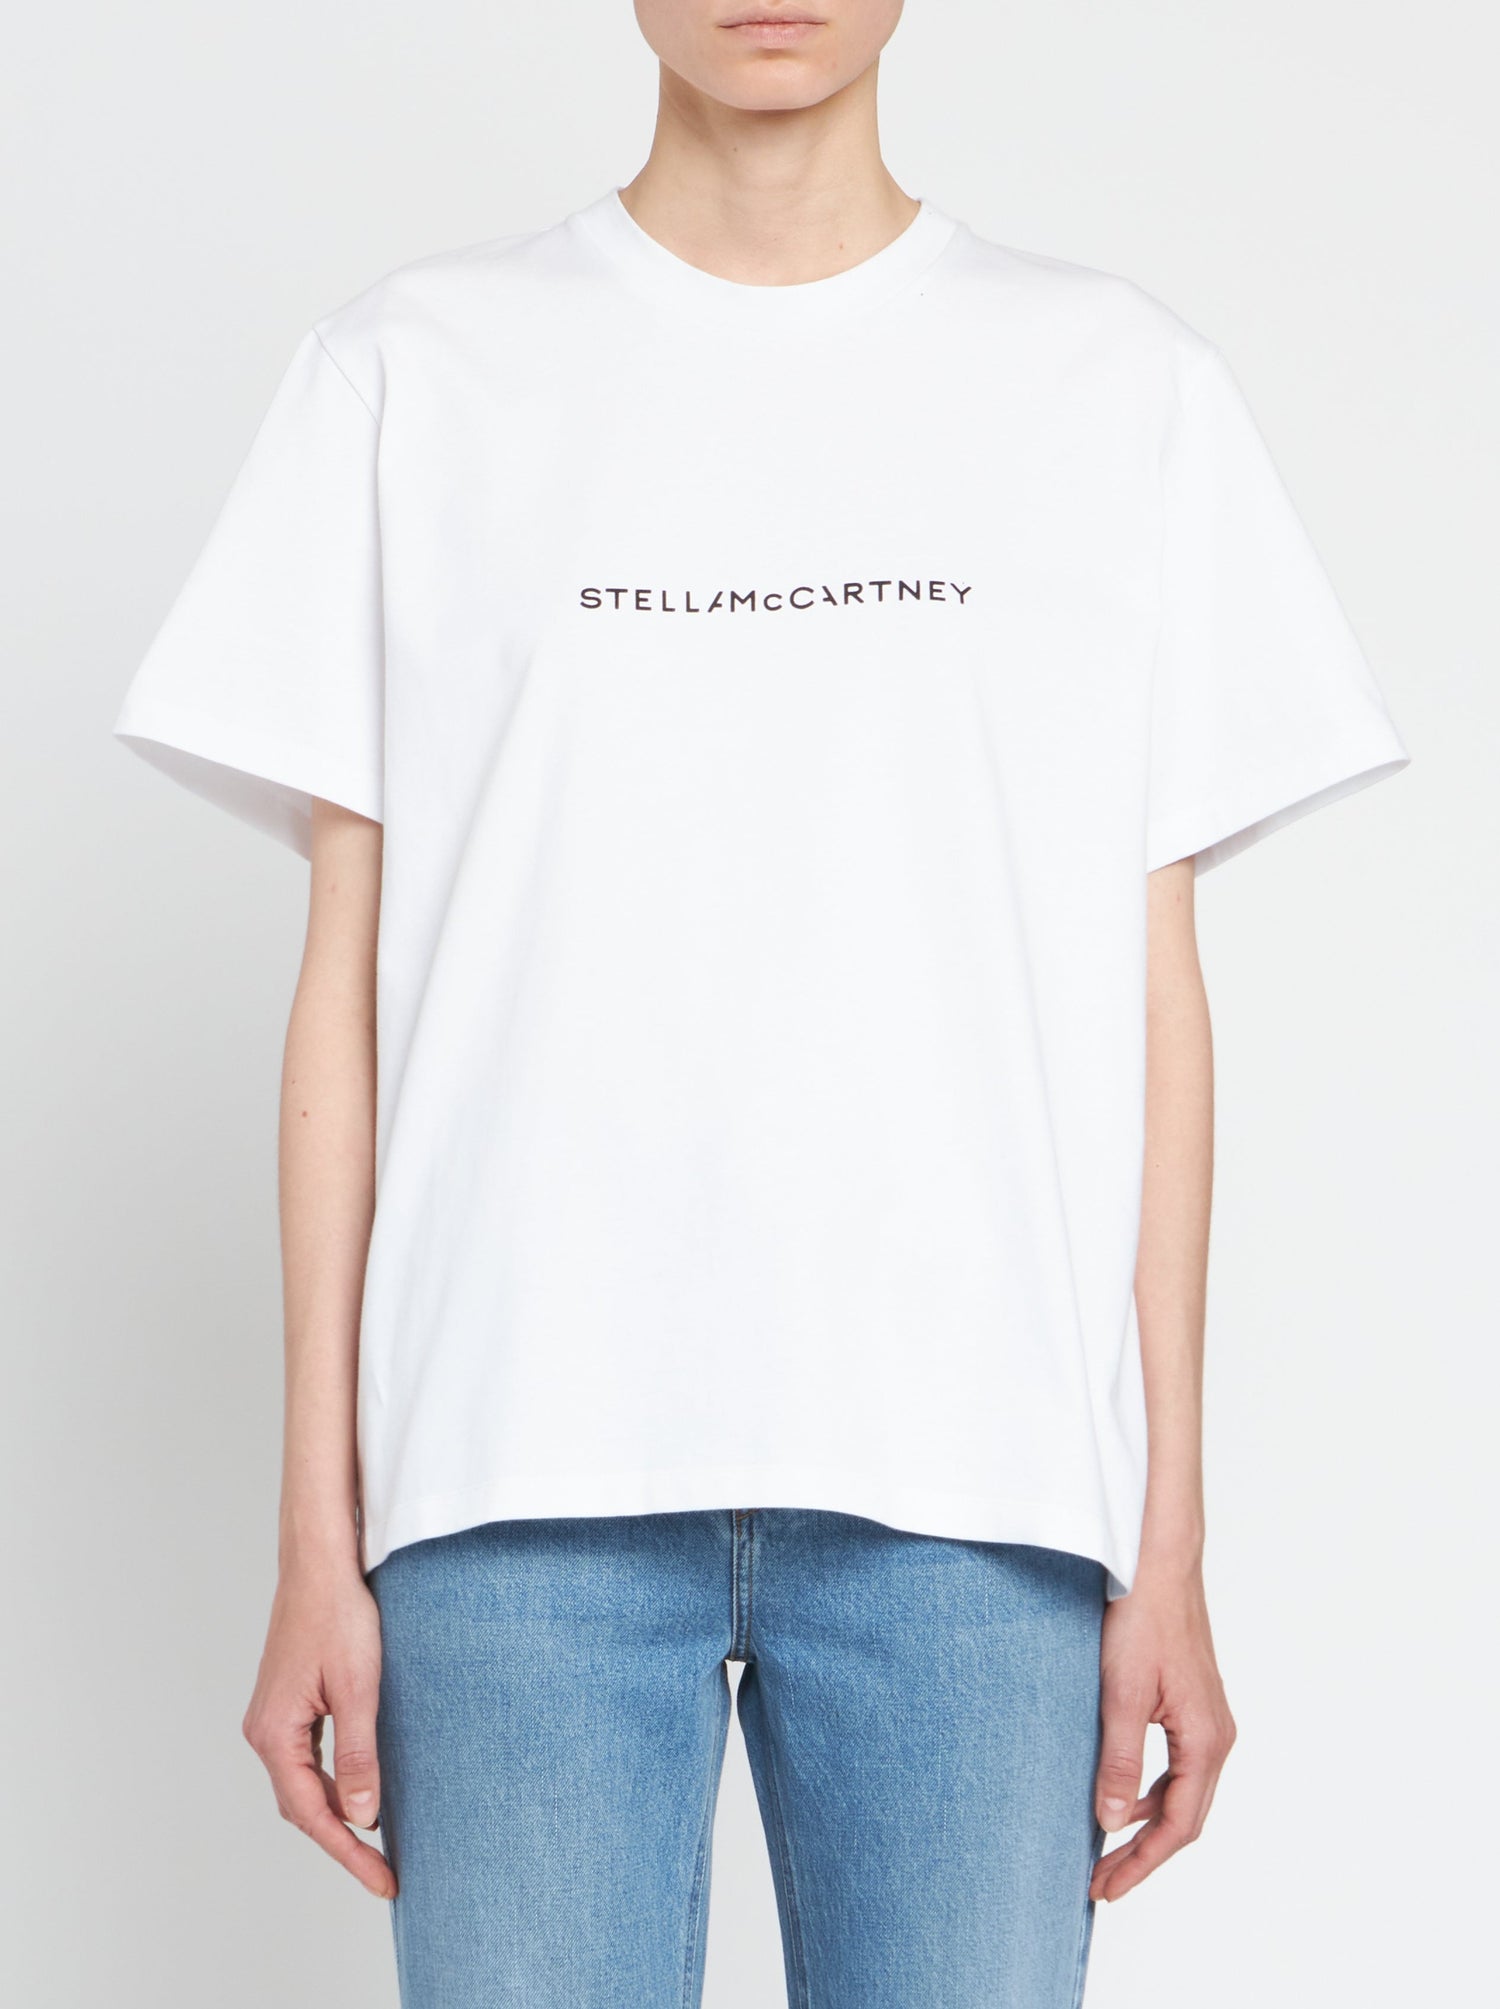 Iconic logo Print t-shirt, pure white